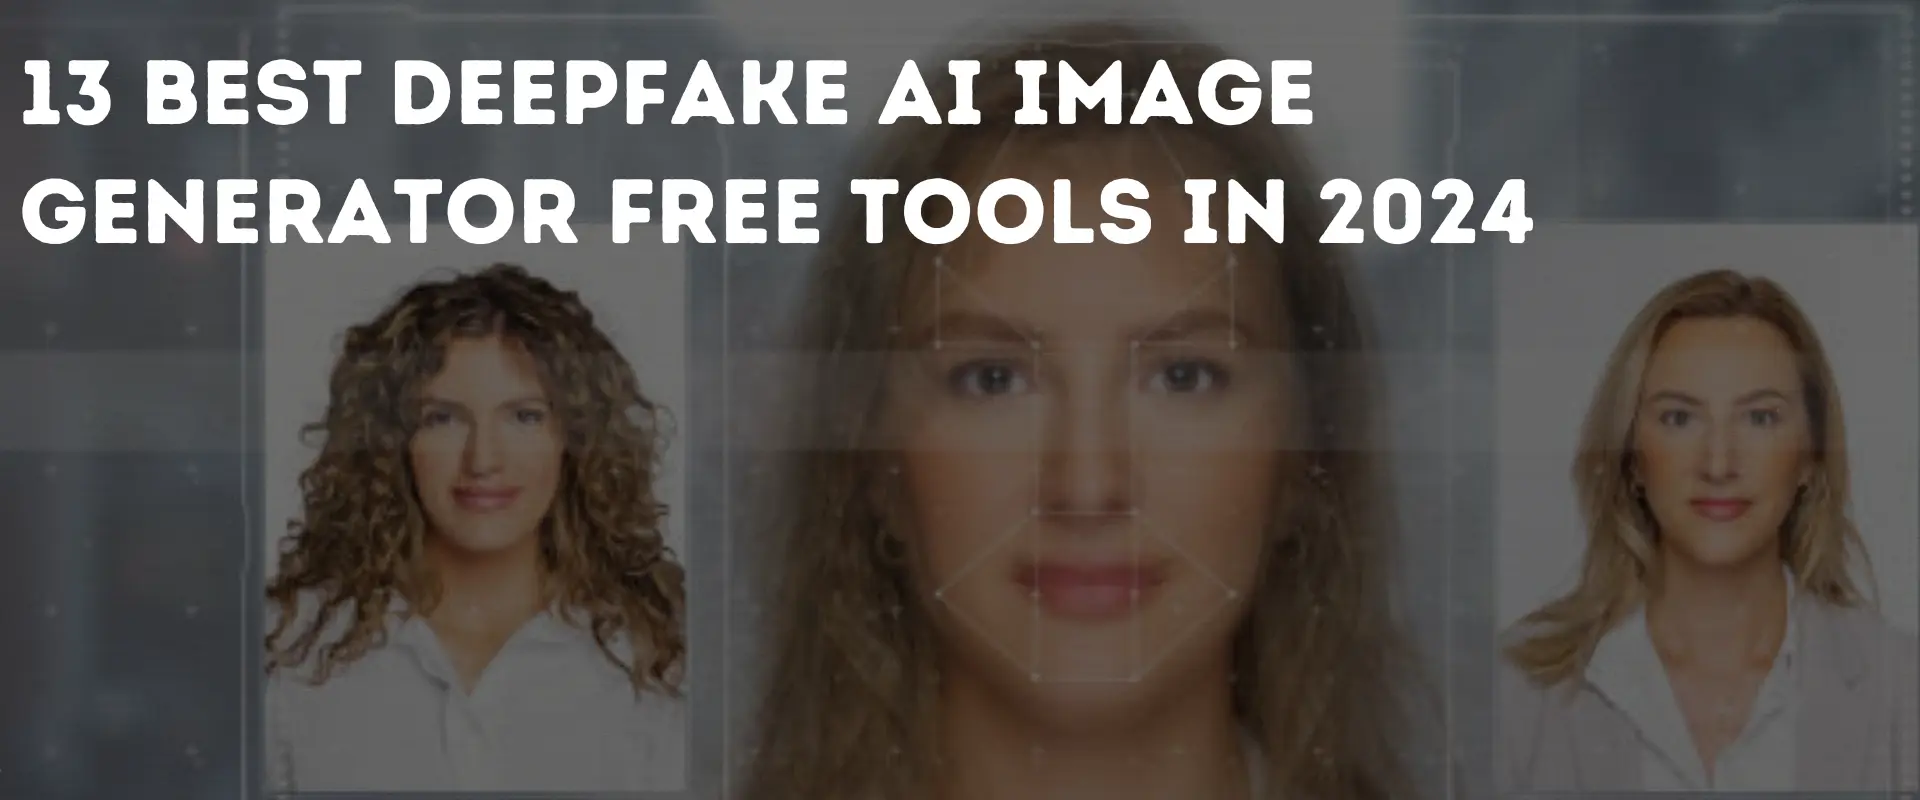 13 Best Deepfake AI Image Generator Free Tools in 2024